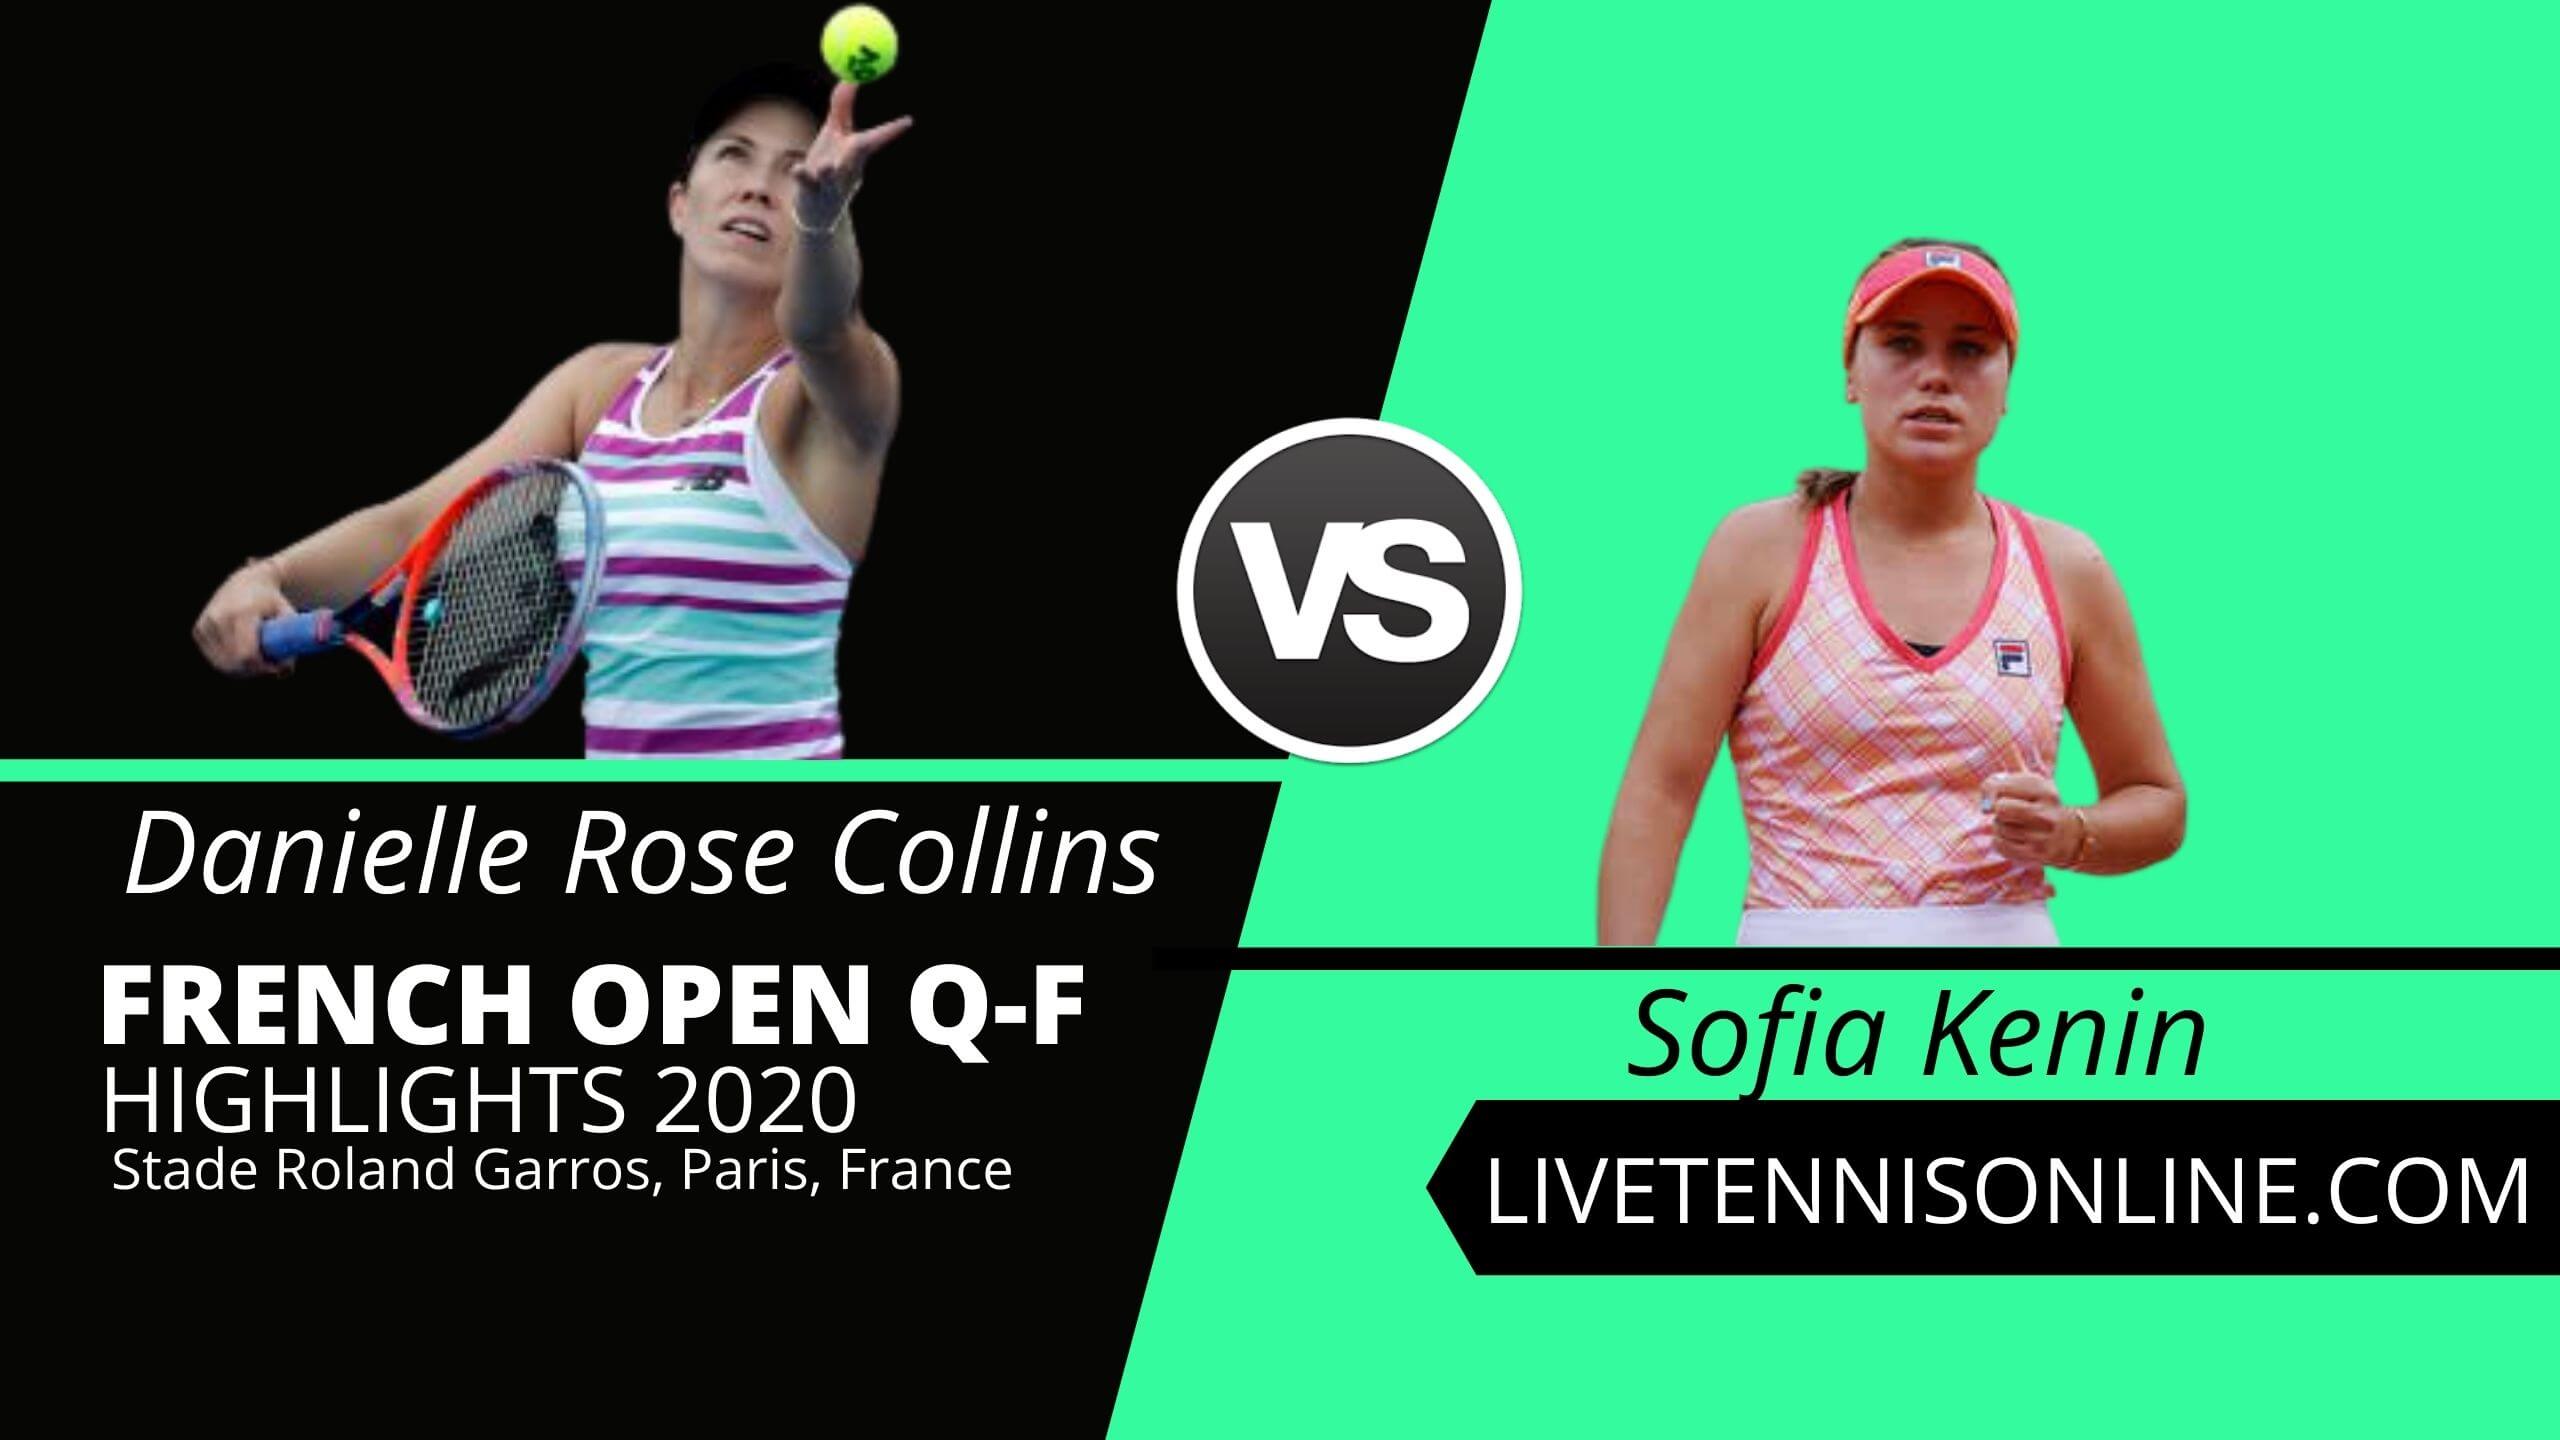 Danielle Rose Collins vs Sofia Kenin Highlights 2020